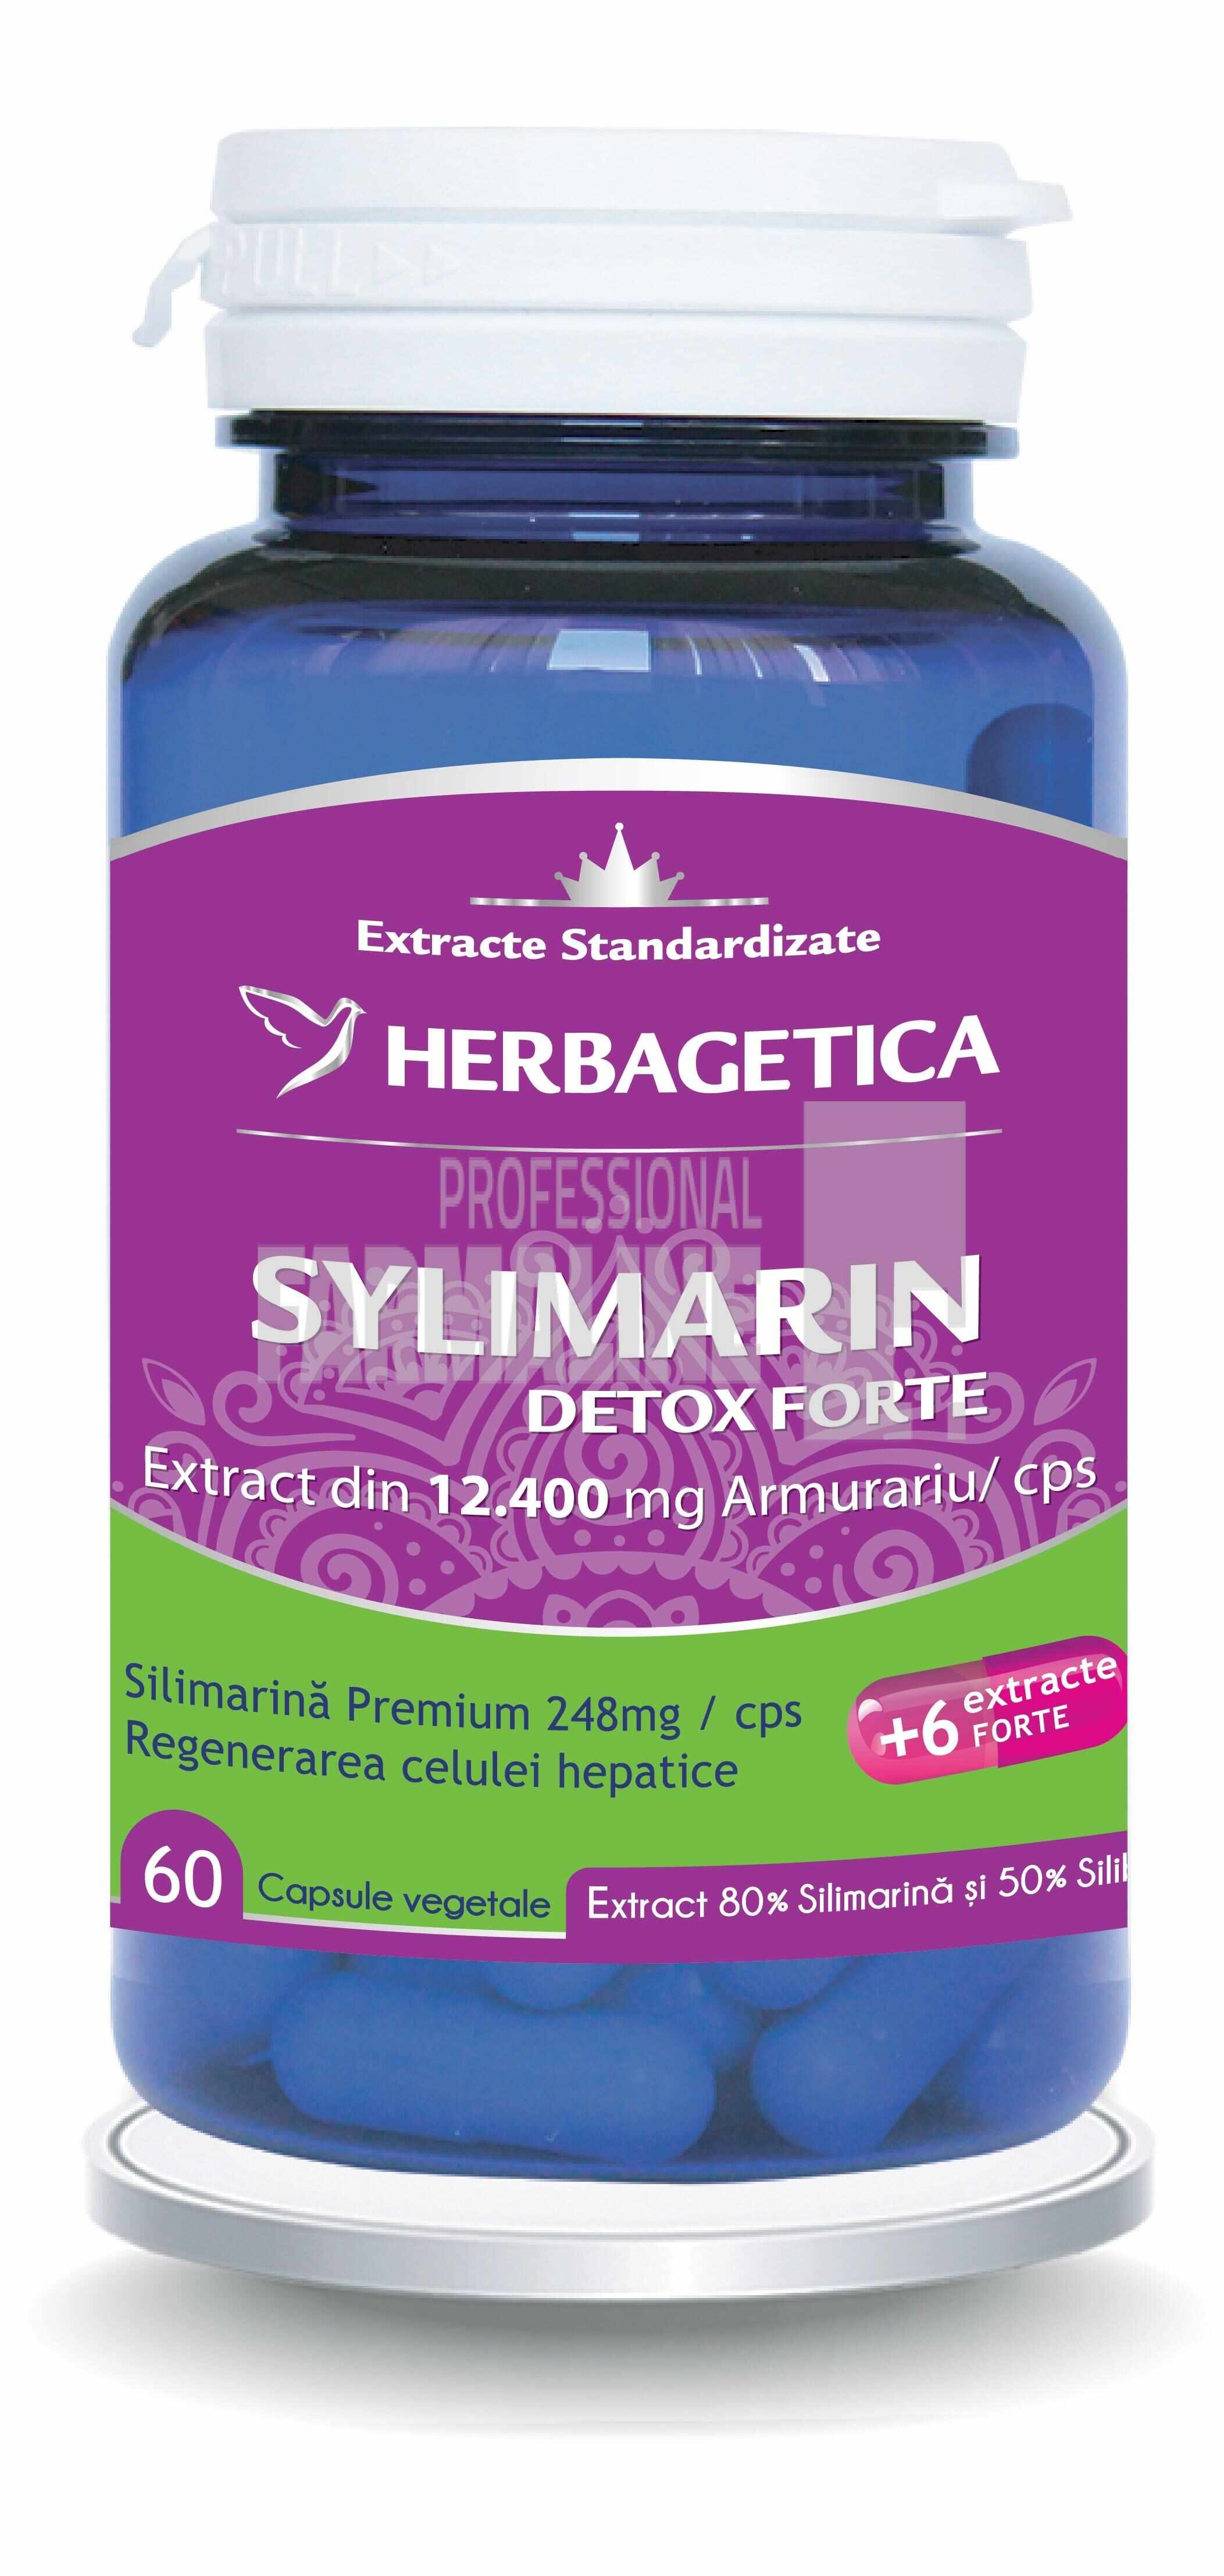 Silymarin 80/50 Detox Forte 60 capsule